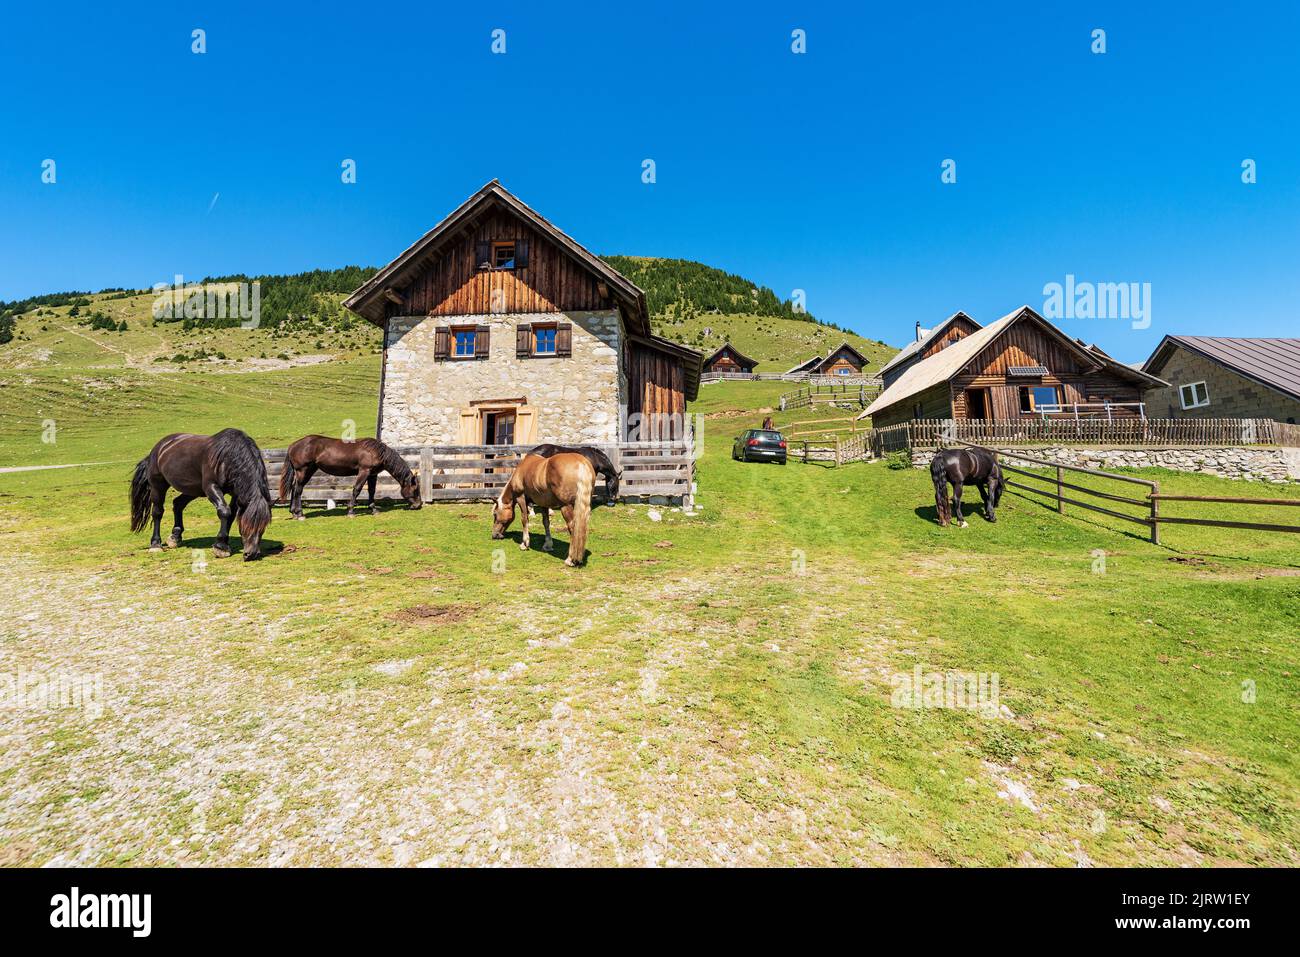 Herd of brown horses in a mountain pasture, Italy-Austria border, Feistritz an der Gail, Osternig or Oisternig peak, Carinthia, Carnic Alps, Austria. Stock Photo